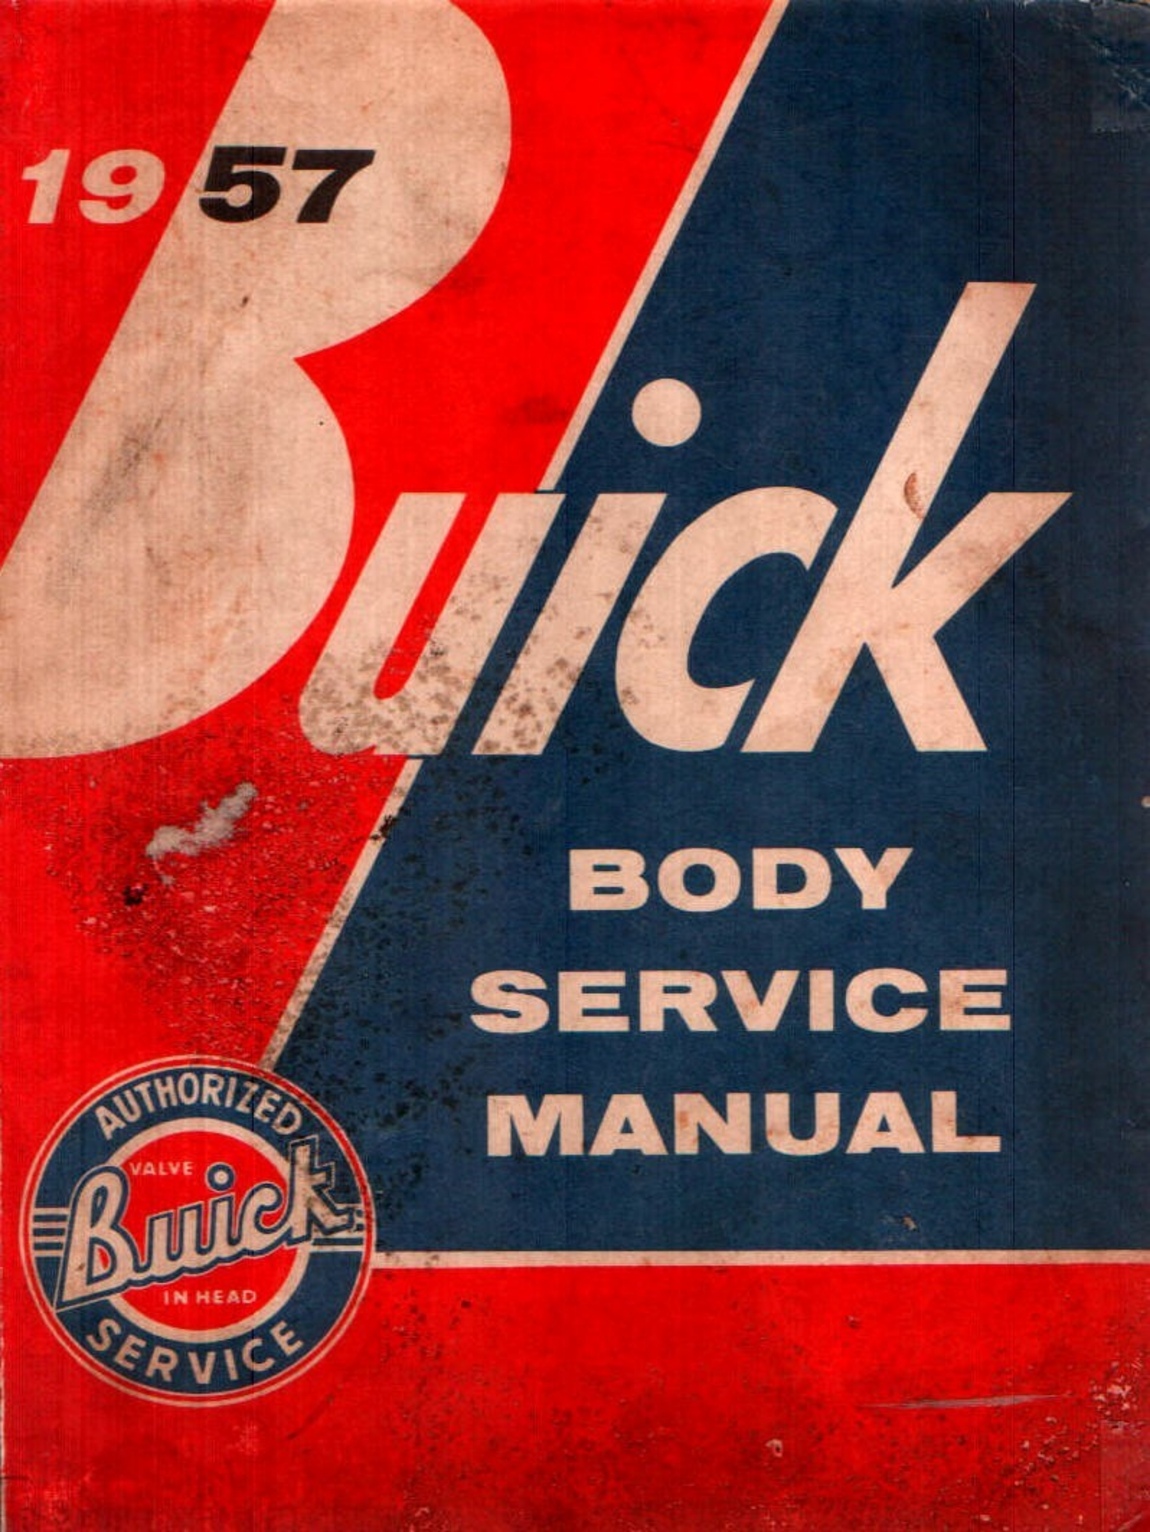 n_1957 Buick Body Service Manual-001-001.jpg